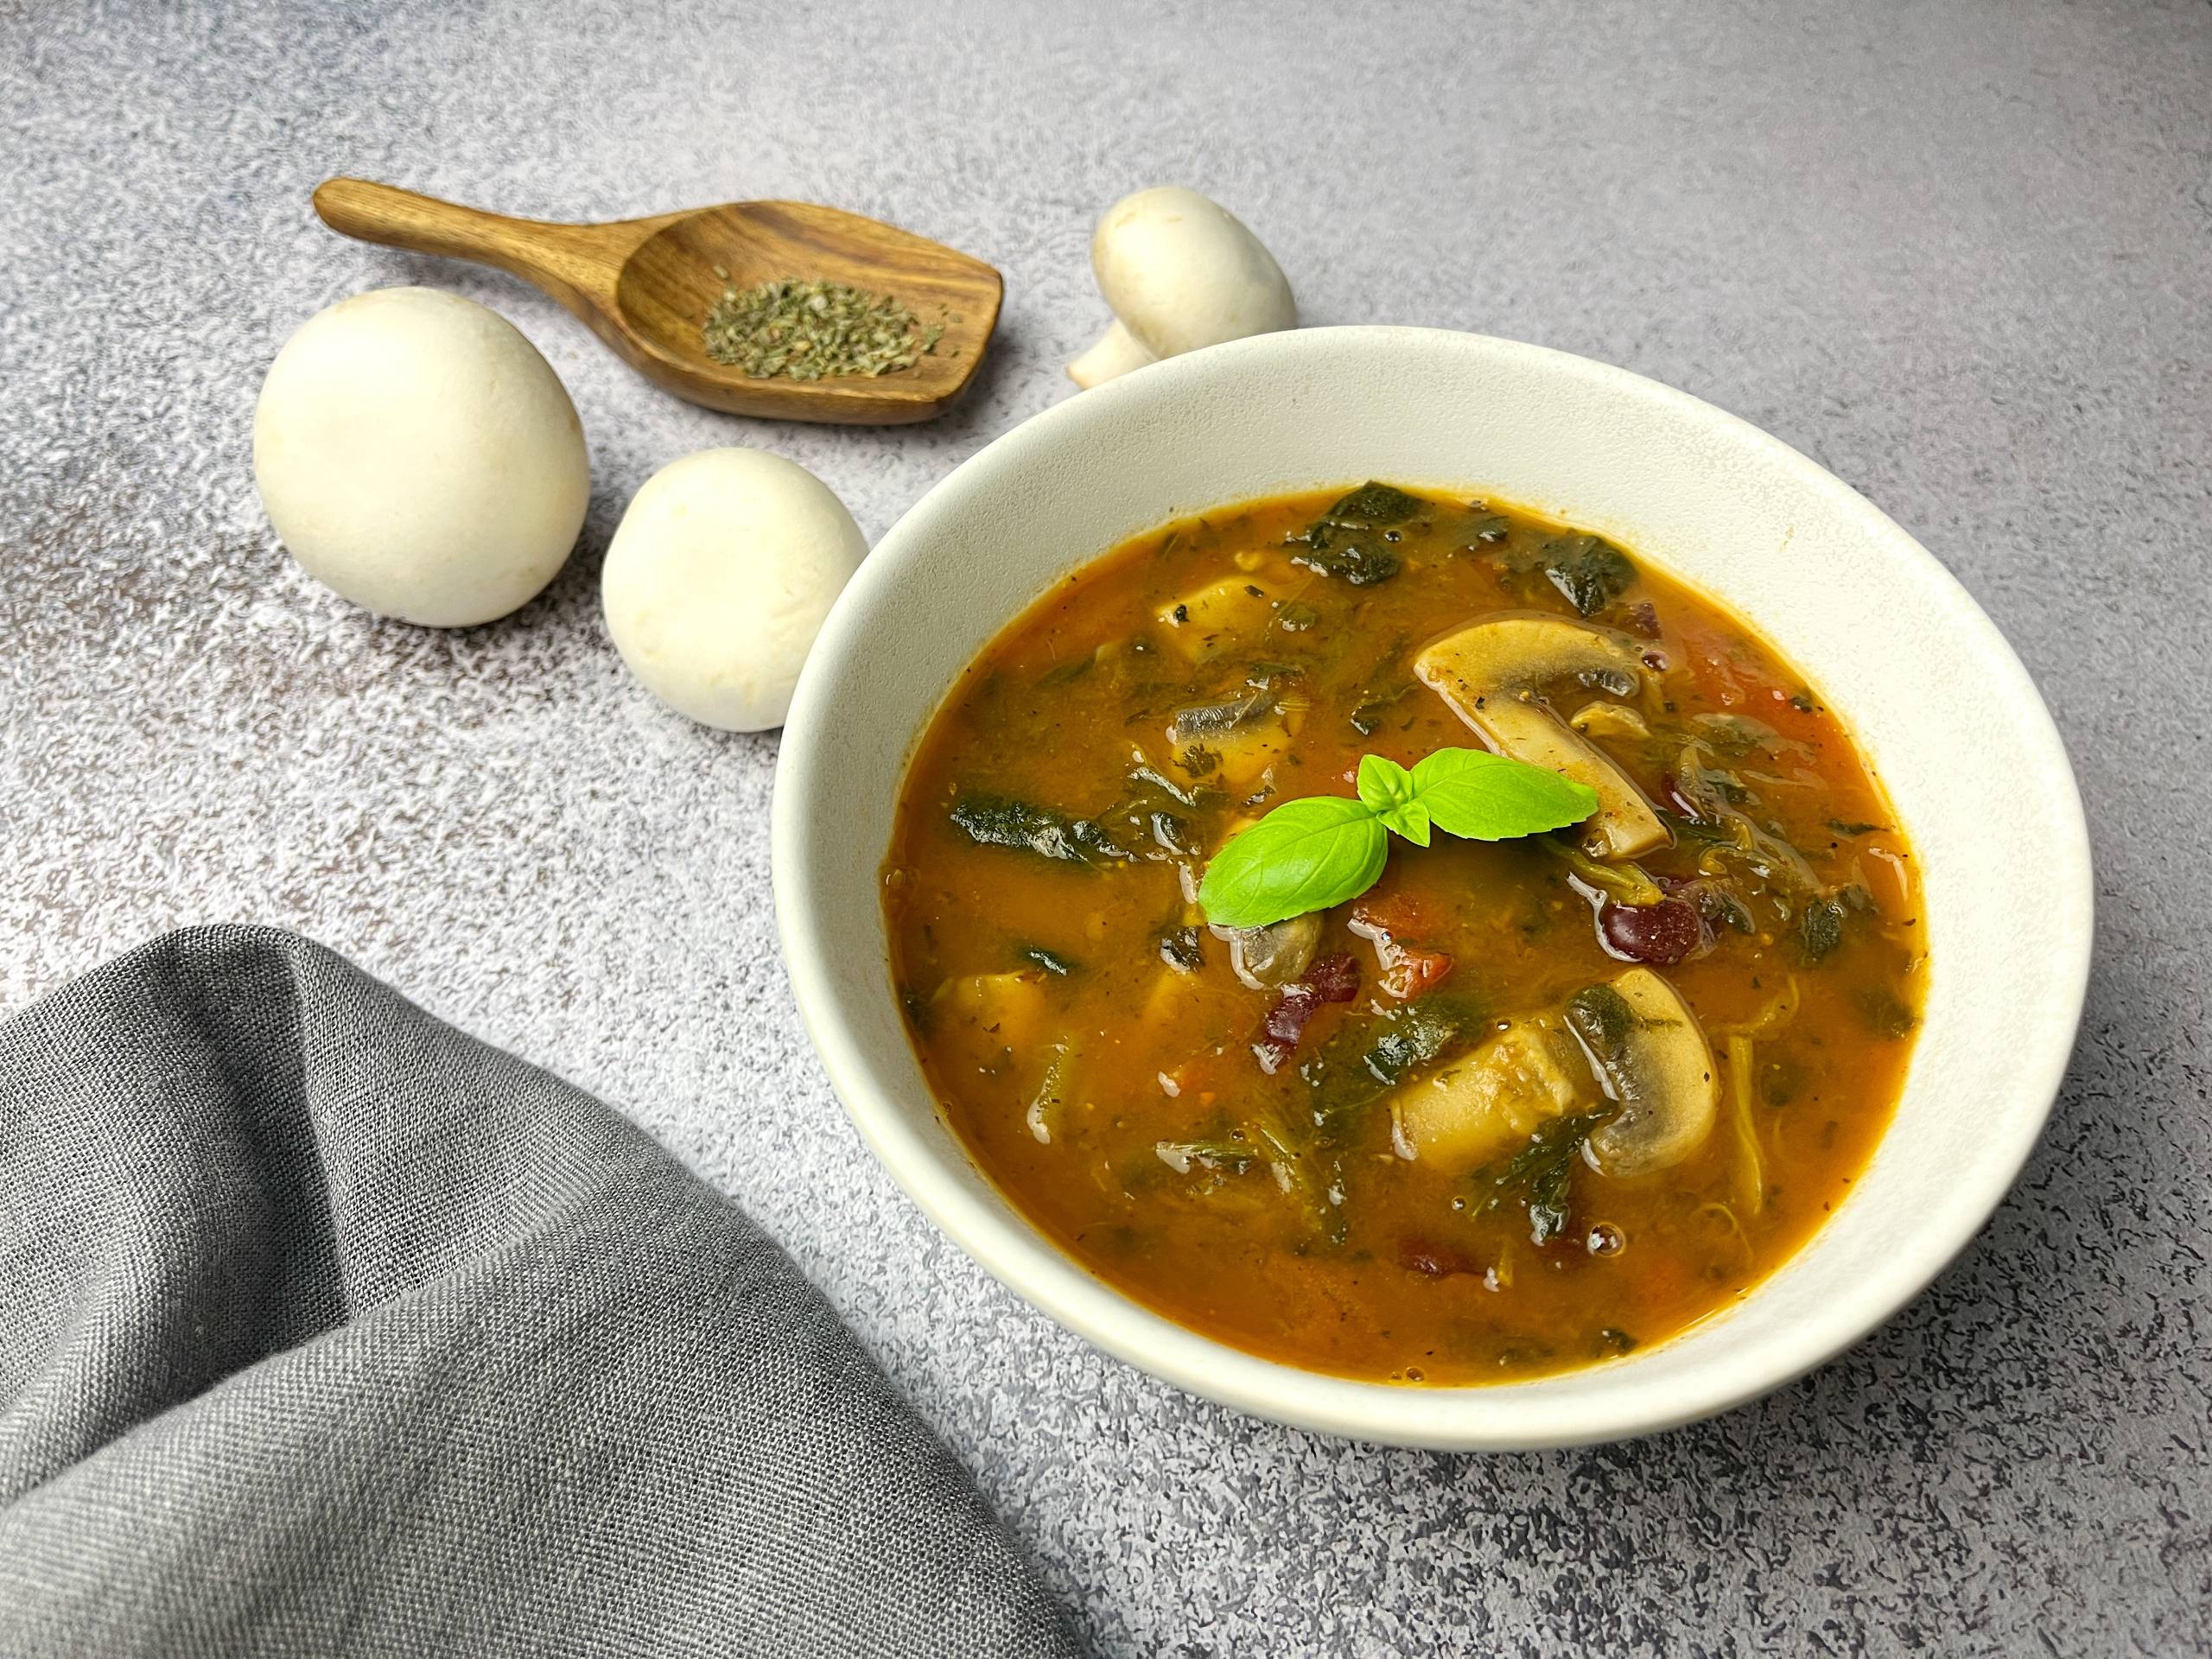 Kidney bean and mushroom soup